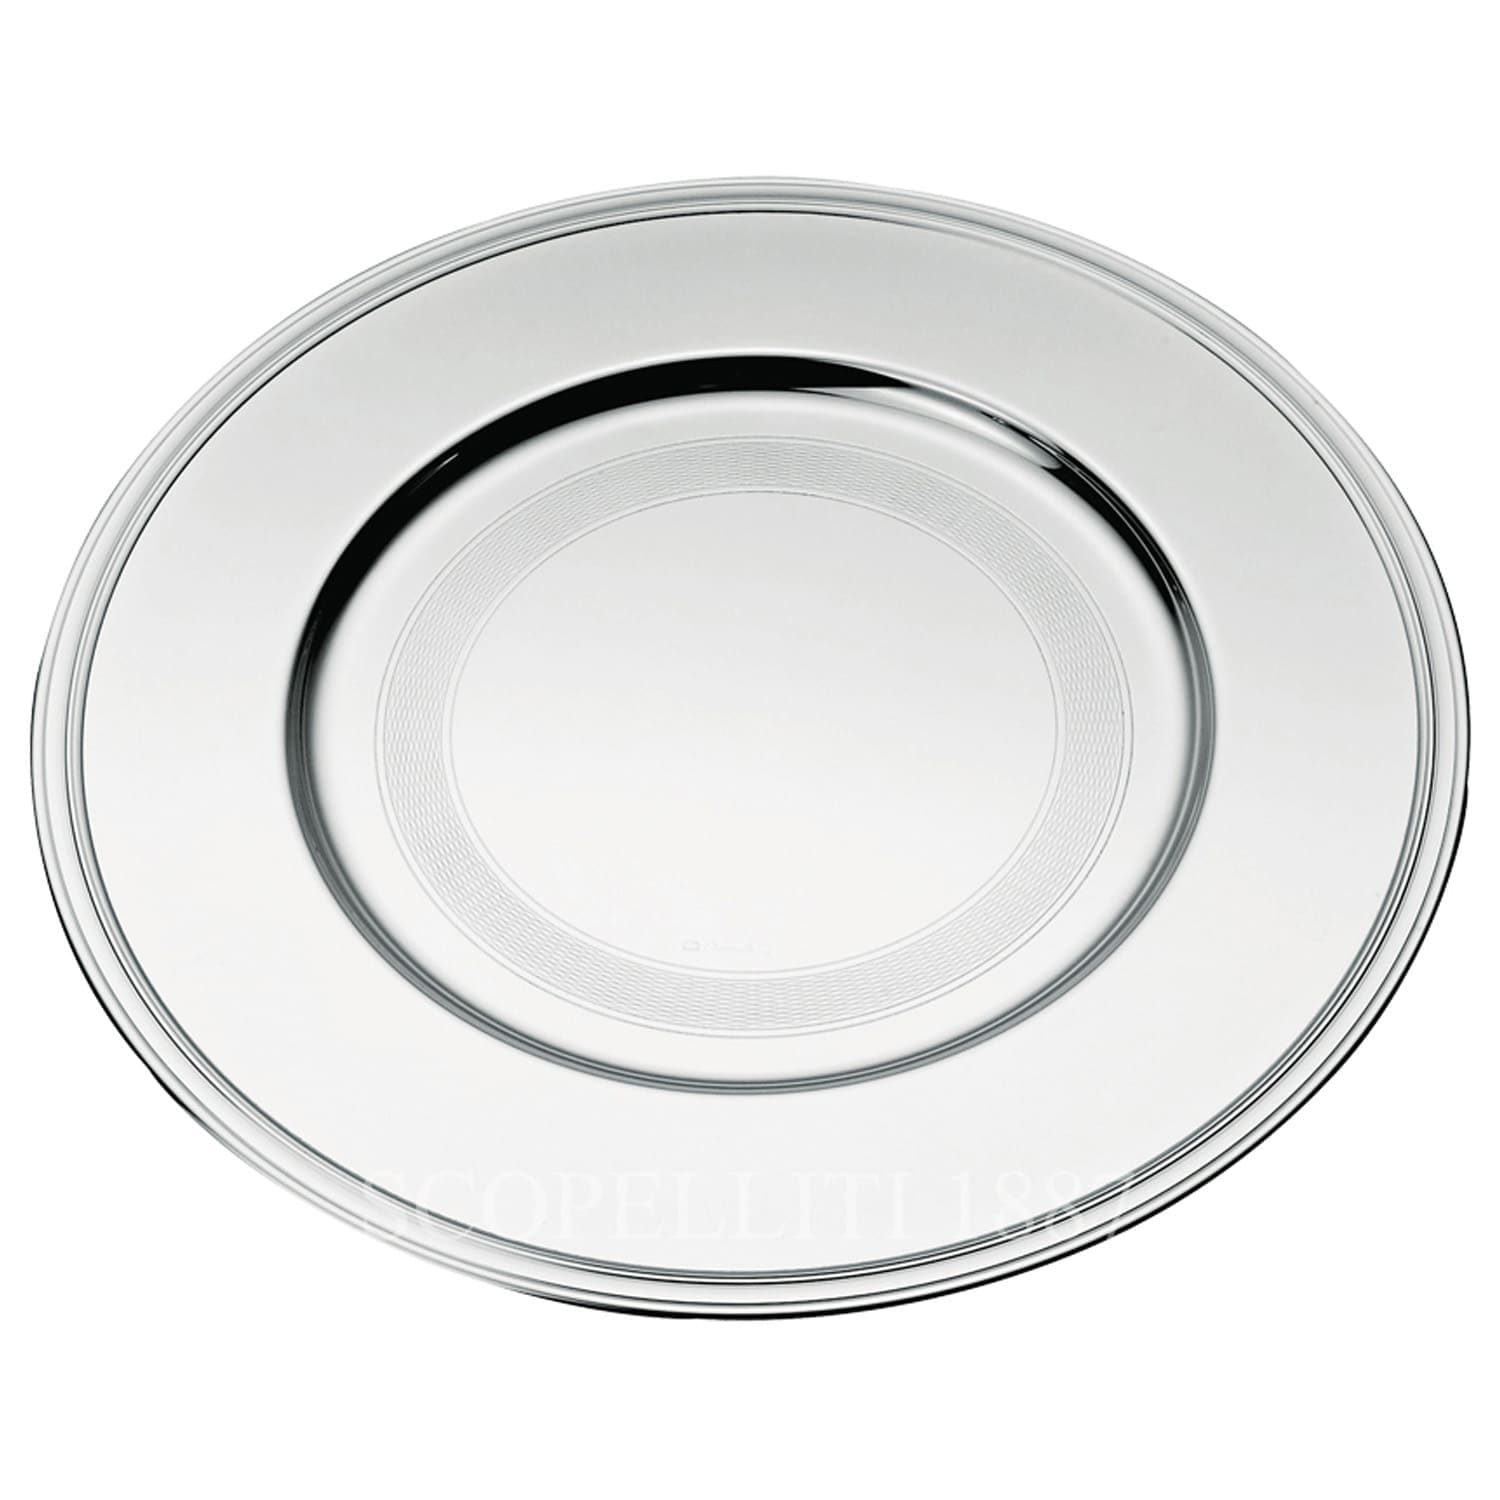 christofle albi silver plated presentation plate